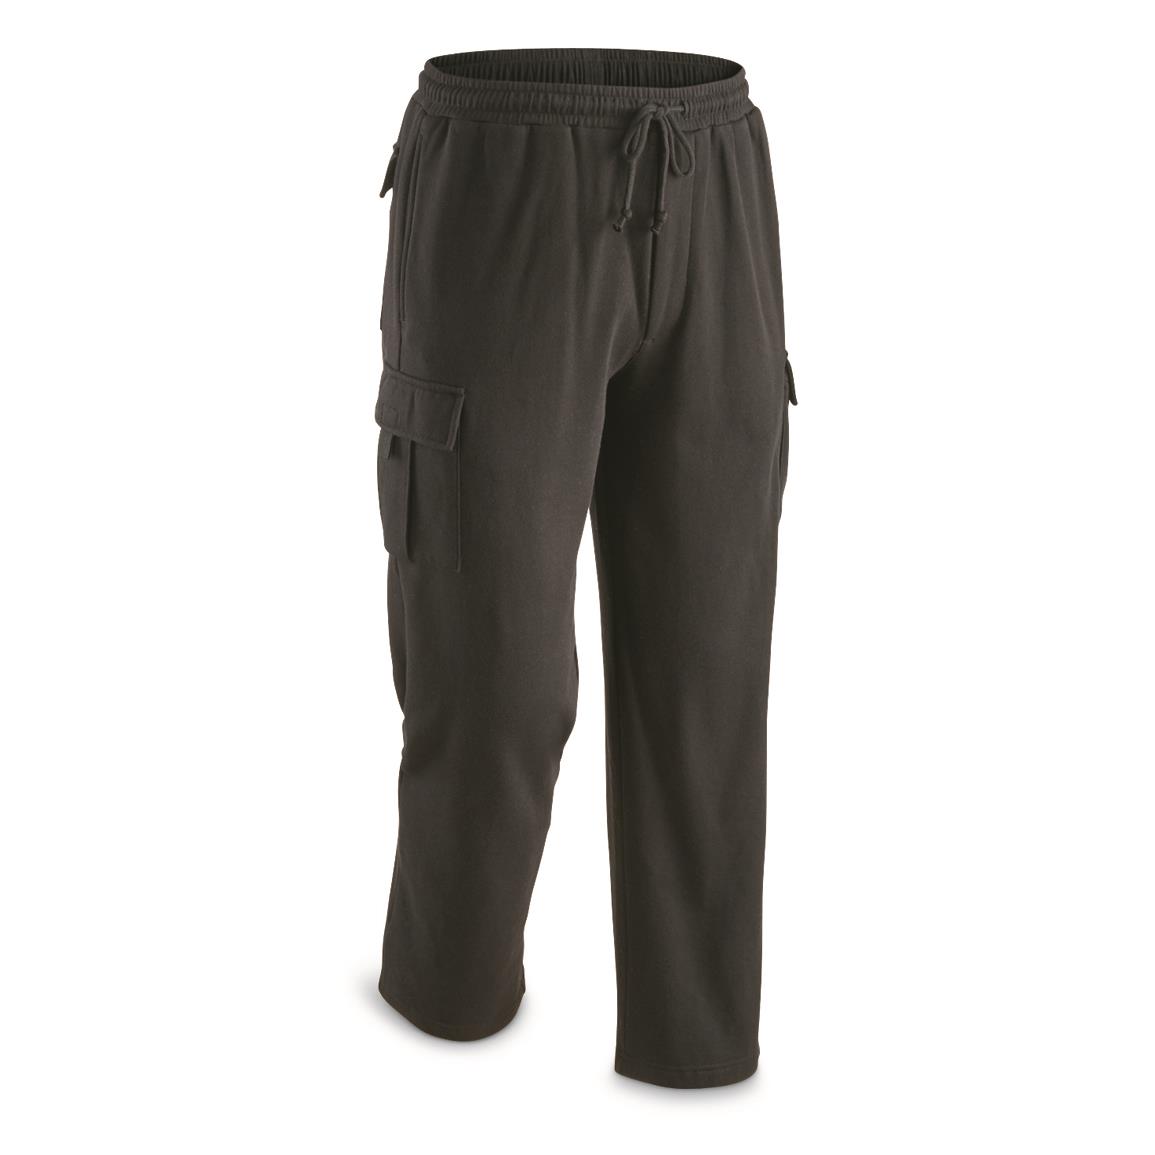 Guide Gear Men's Cargo Sweatpants - 203616, Jeans & Pants at Sportsman ...